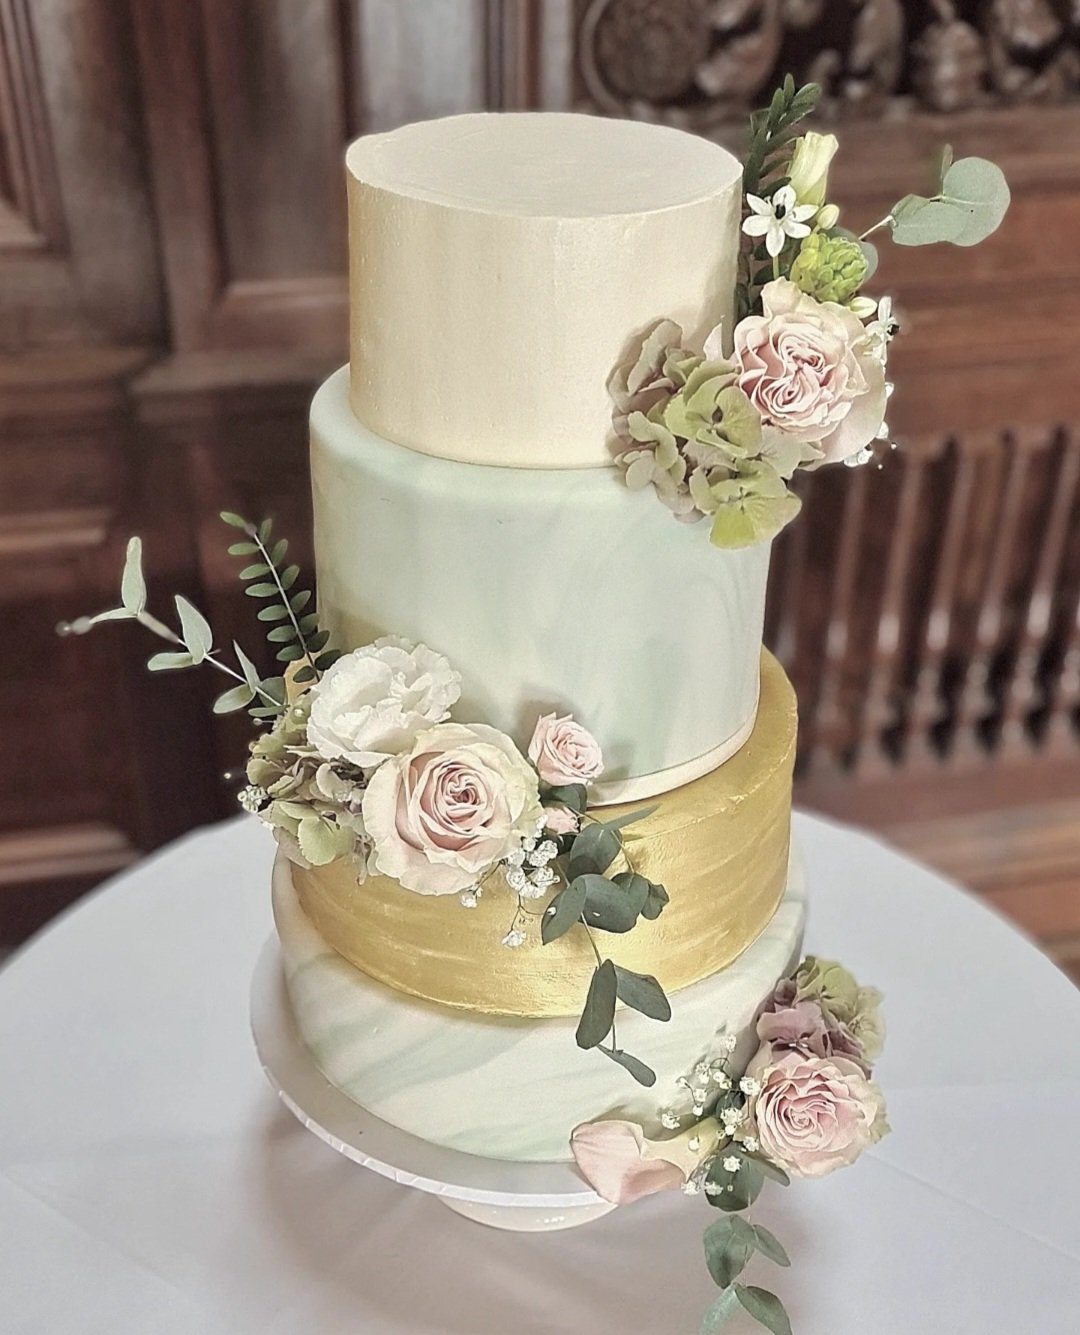 Marbled wedding cake 1.jpg